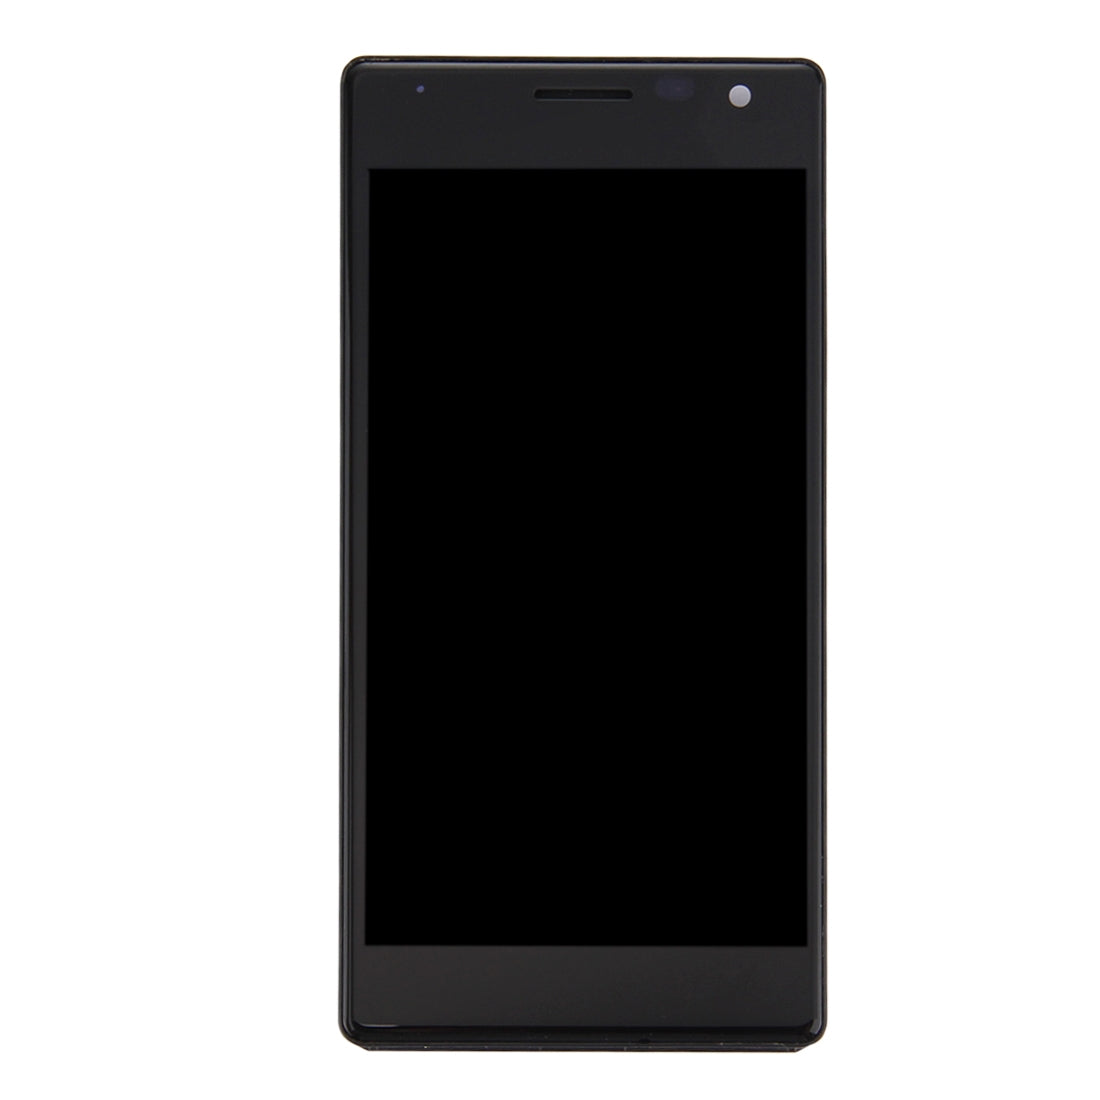 Full Screen LCD + Touch + Frame Nokia Lumia 735 Black